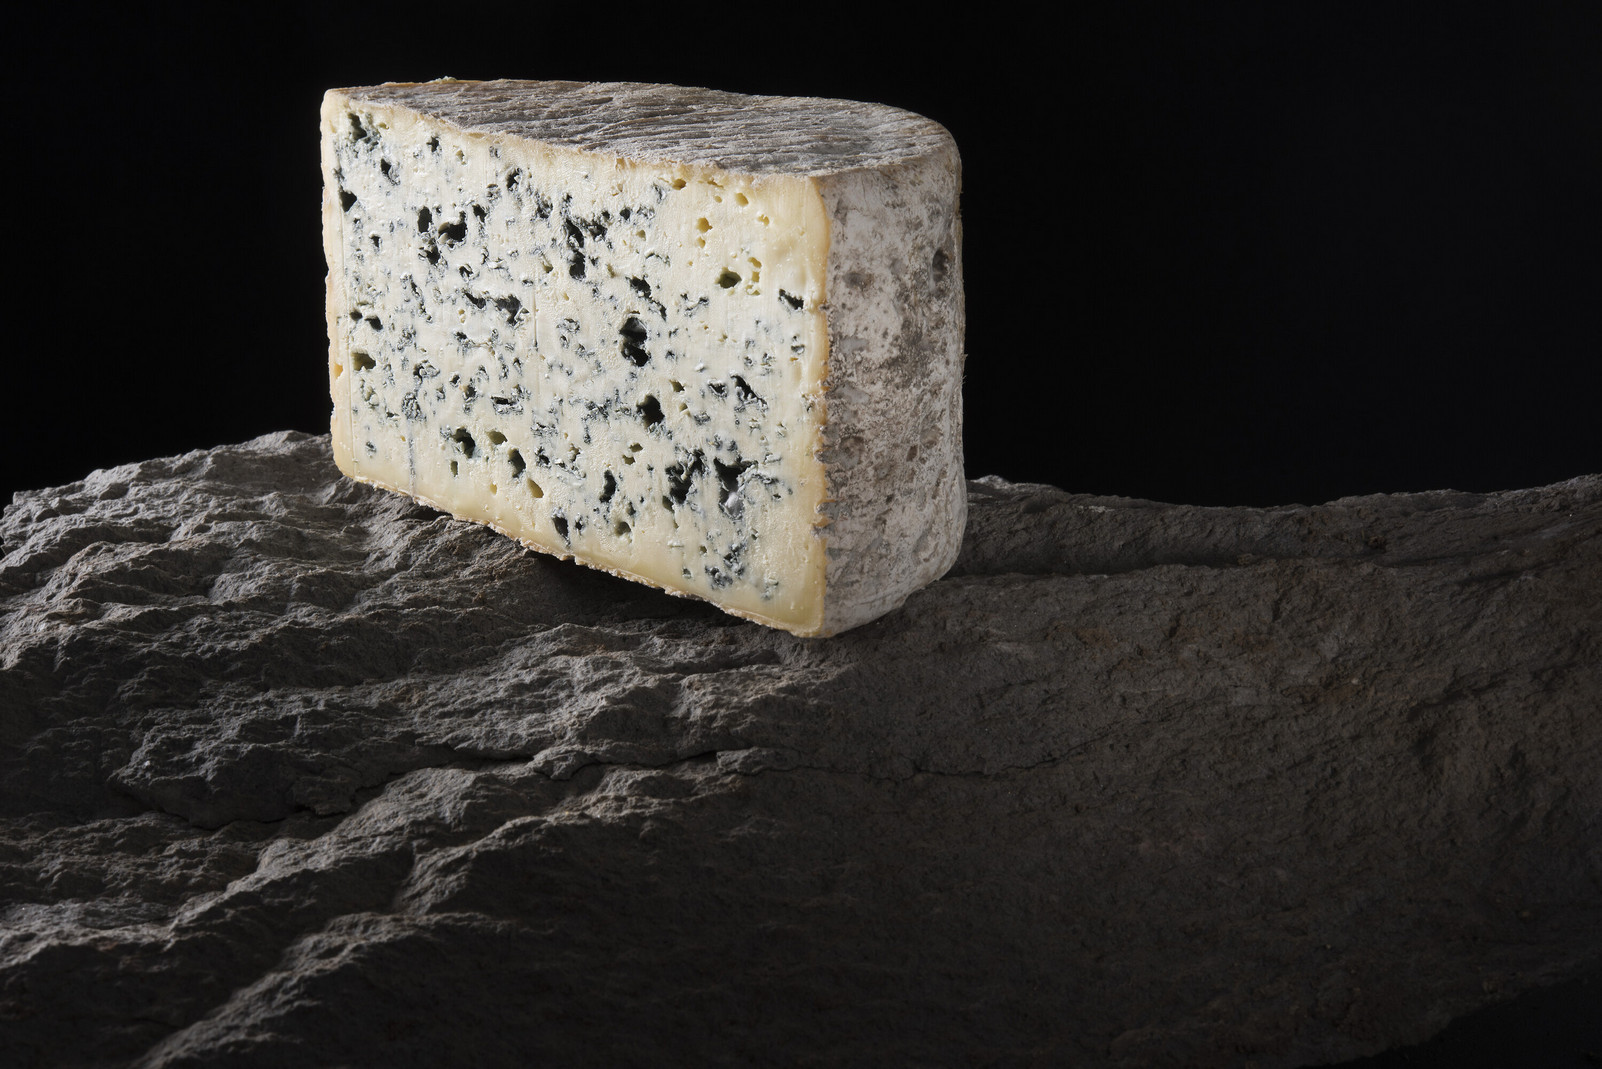 Bleu d'Auvergne, PDO cheese